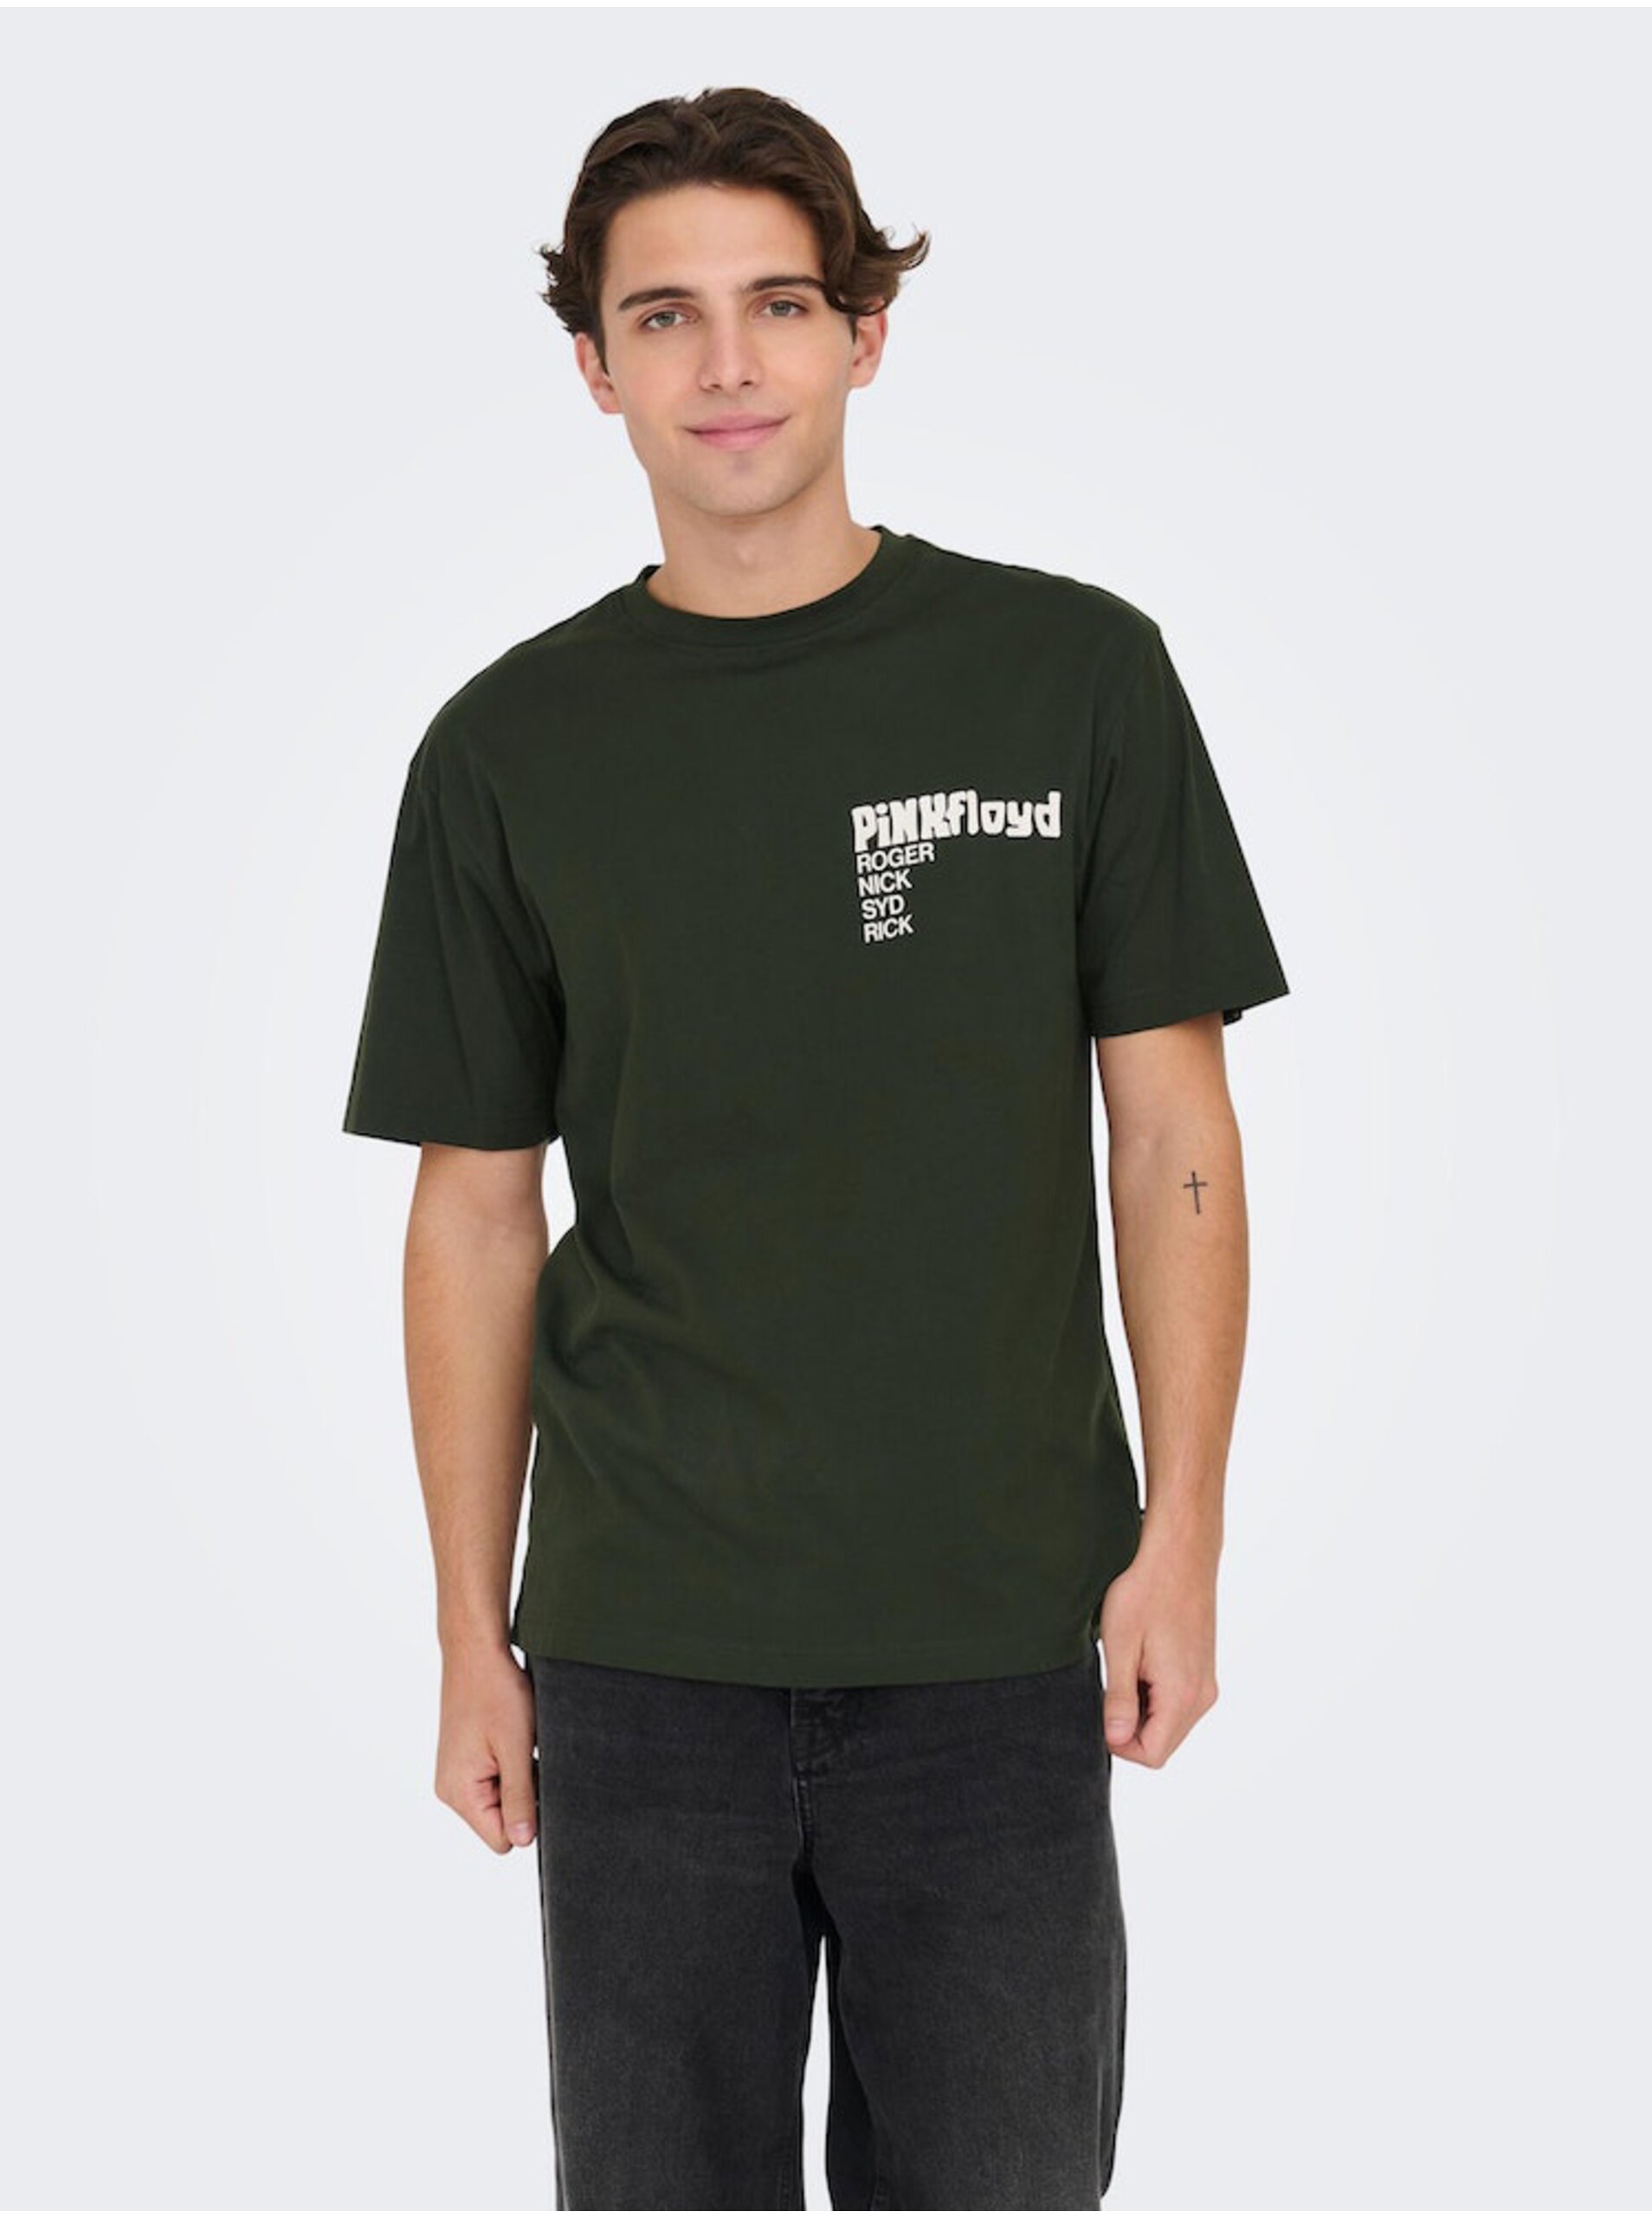 E-shop Tmavozelené pánske tričko s krátkym rukávom ONLY & SONS Pink Floyd